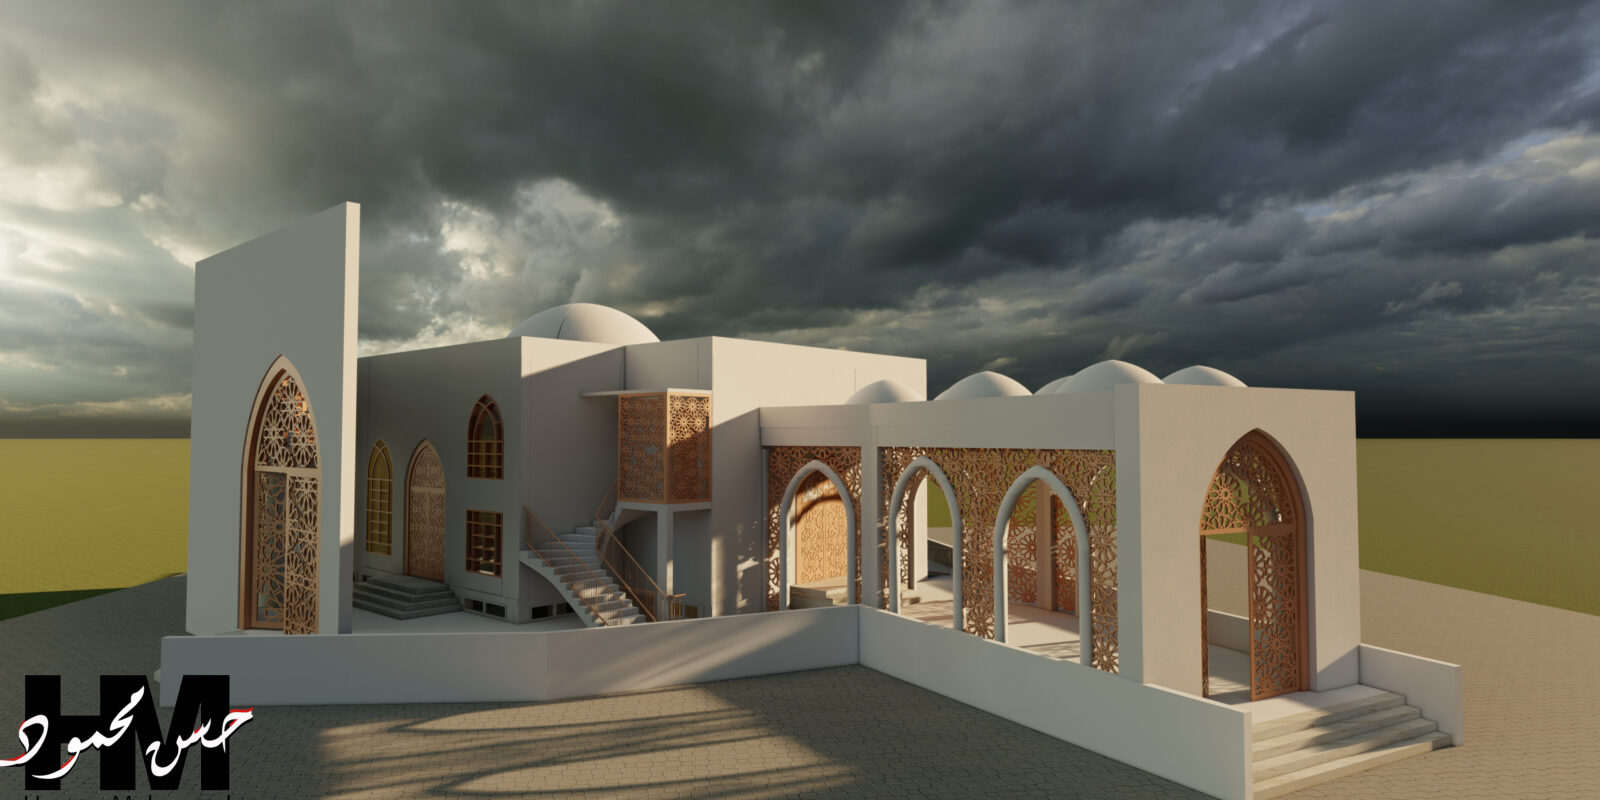 Omdurman mosque